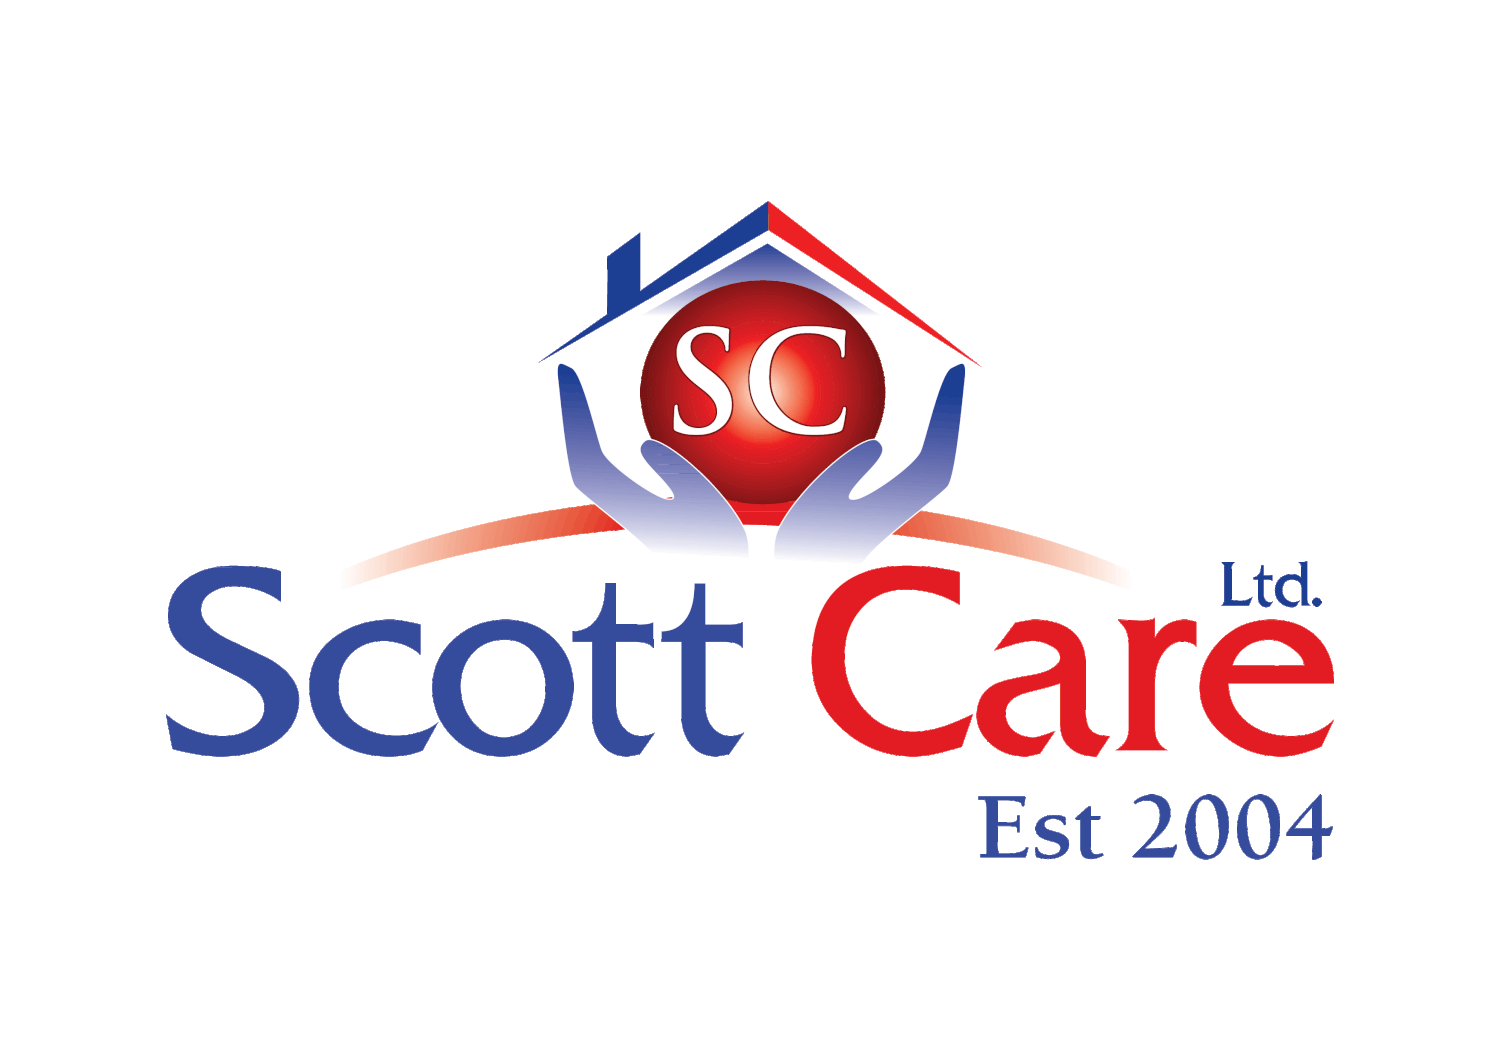 Scott Care Ltd